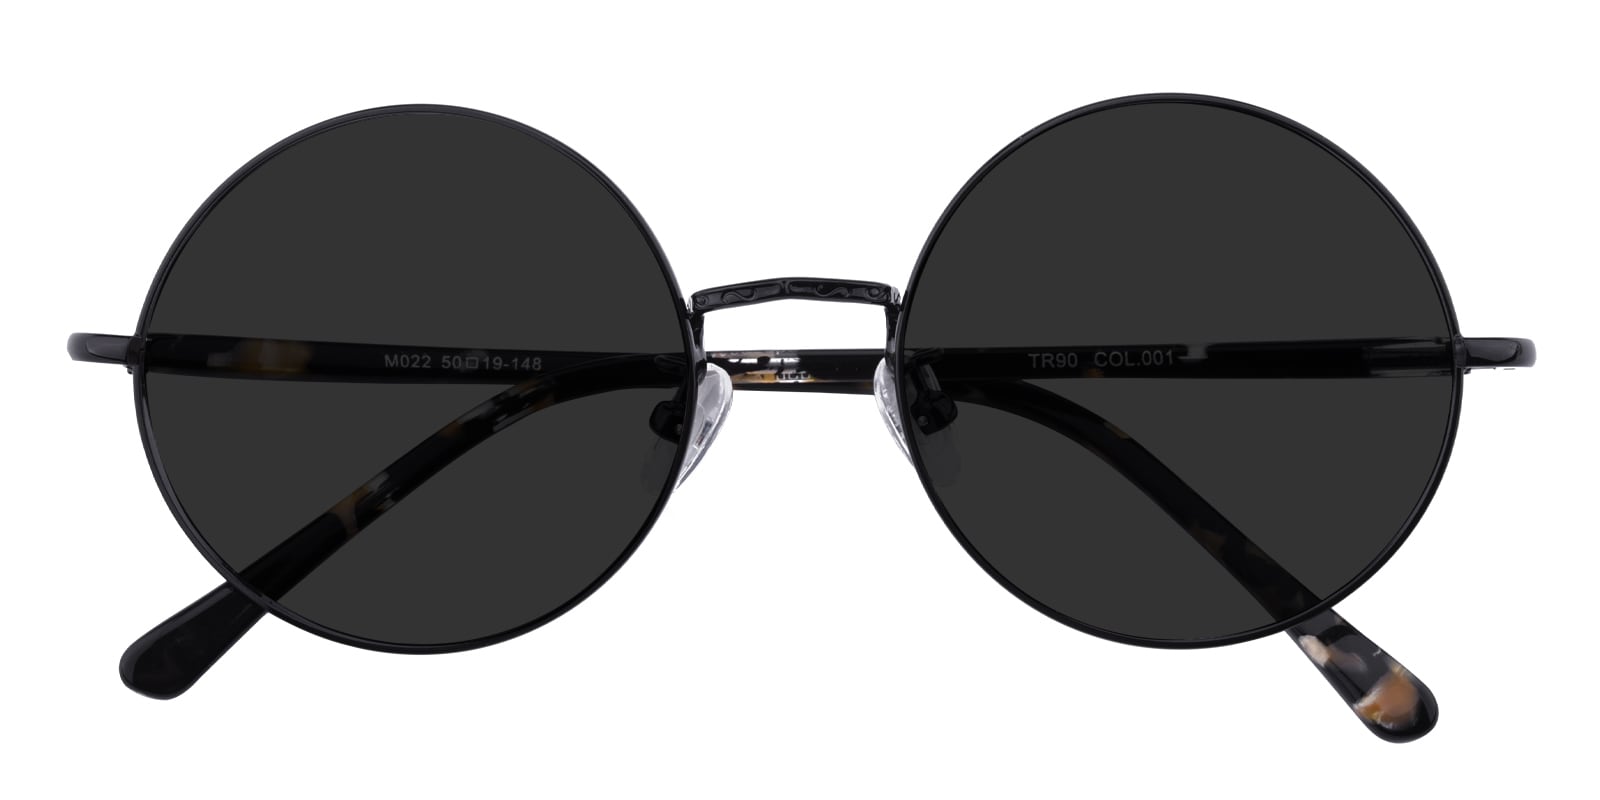 Round Sunglasses, Full Frame Black Metal - SUP0666